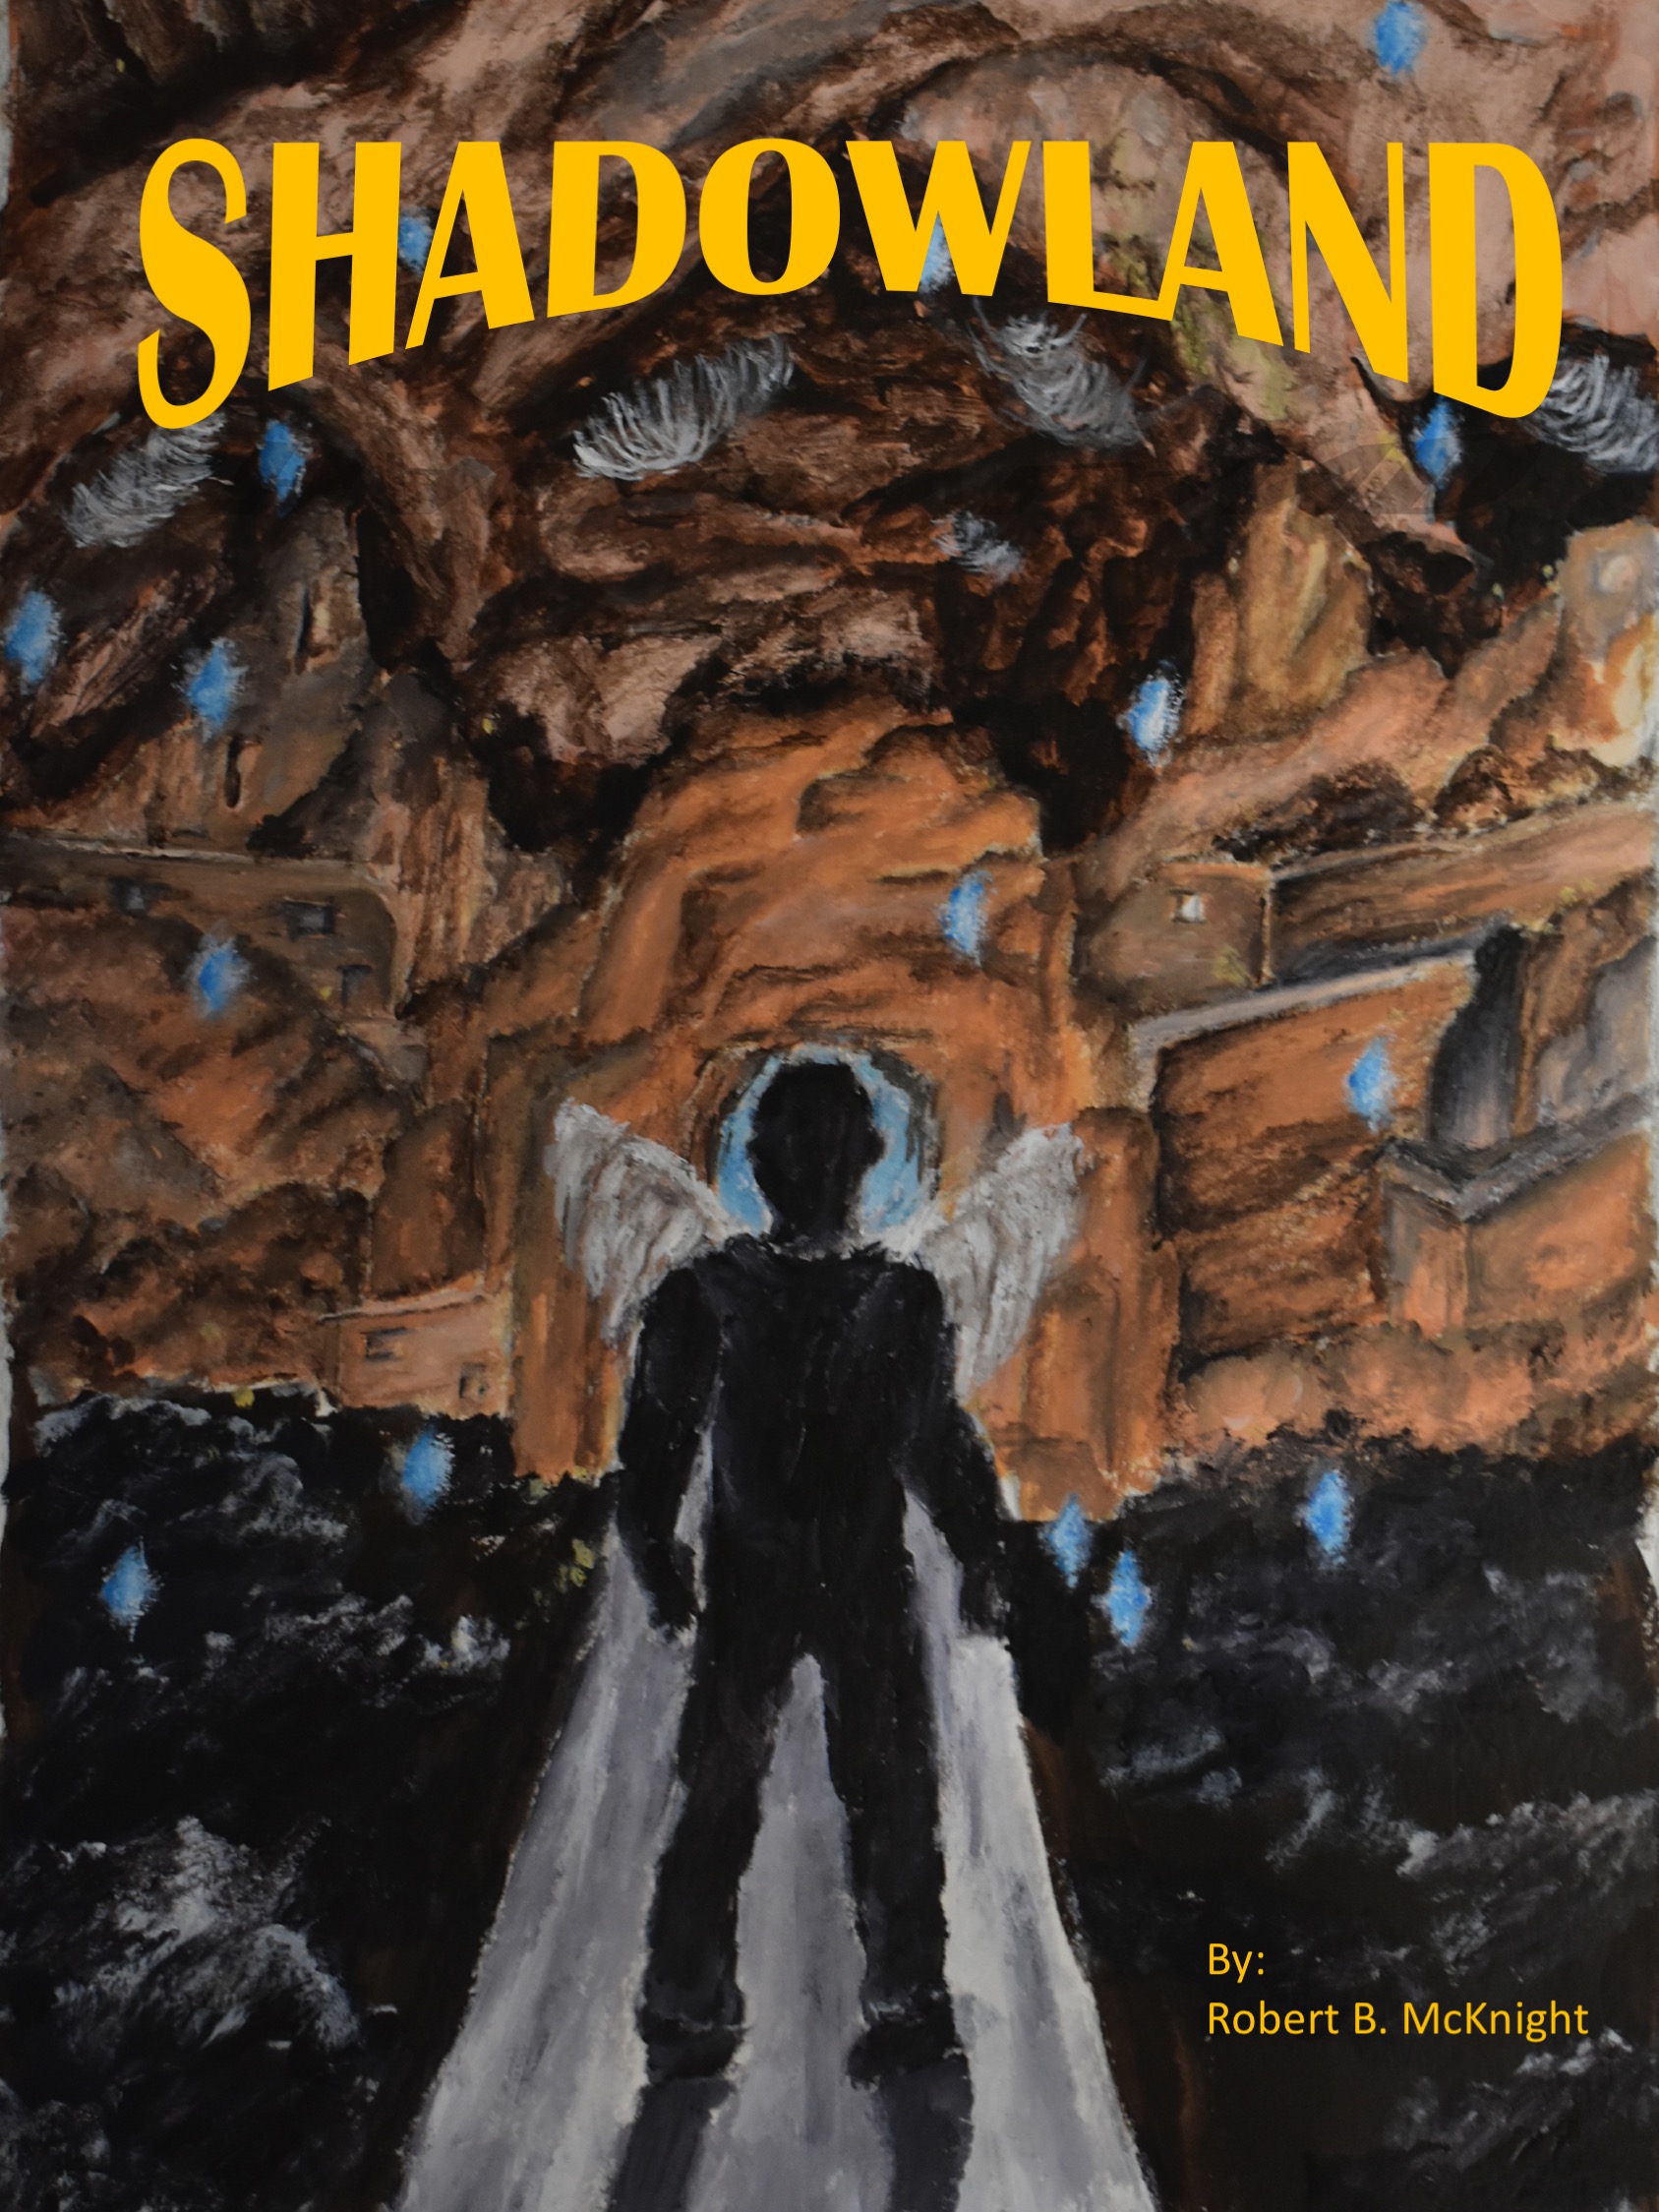 FREE: Shadowland by Robert McKnight